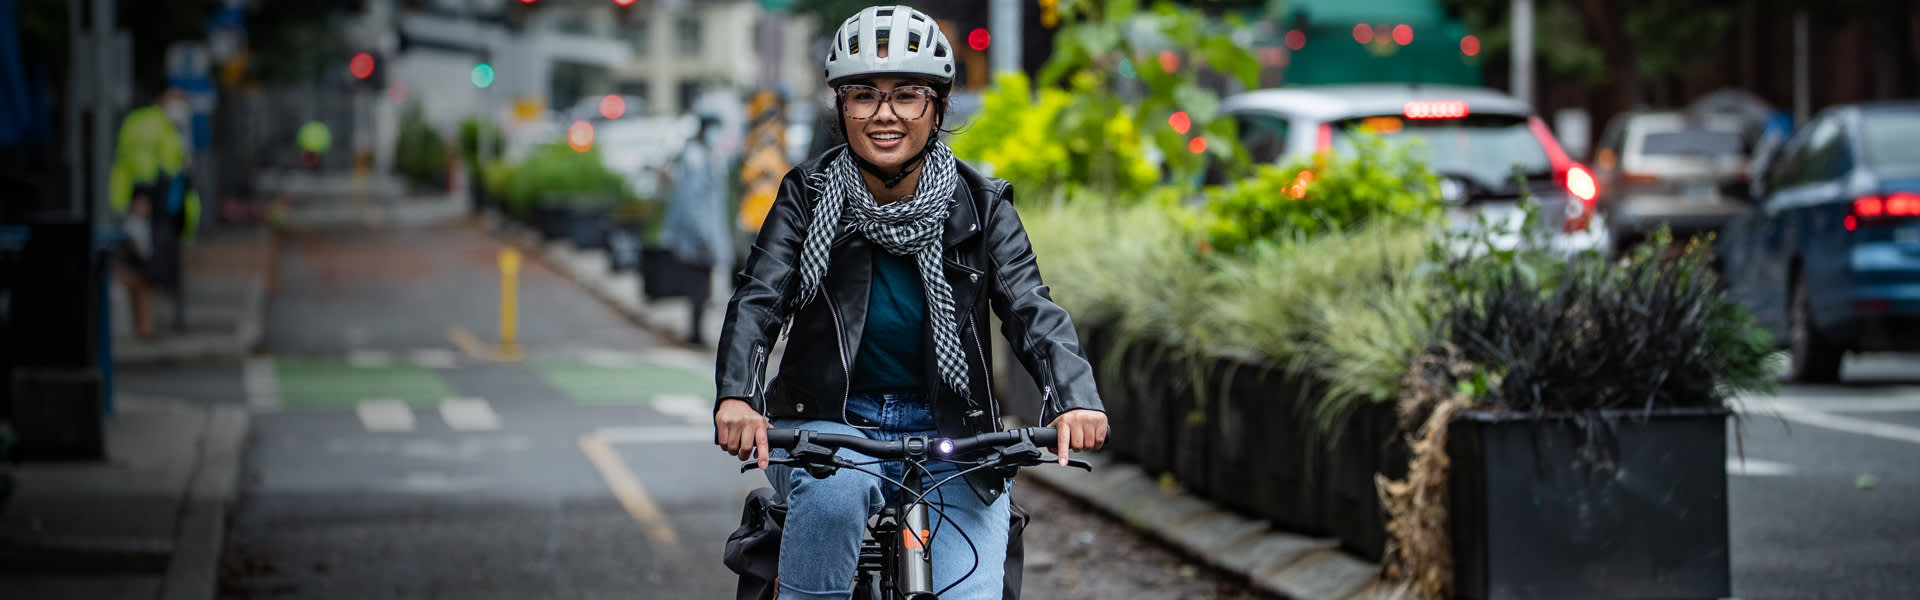 Women's Commuter and Hybrid City Bikes